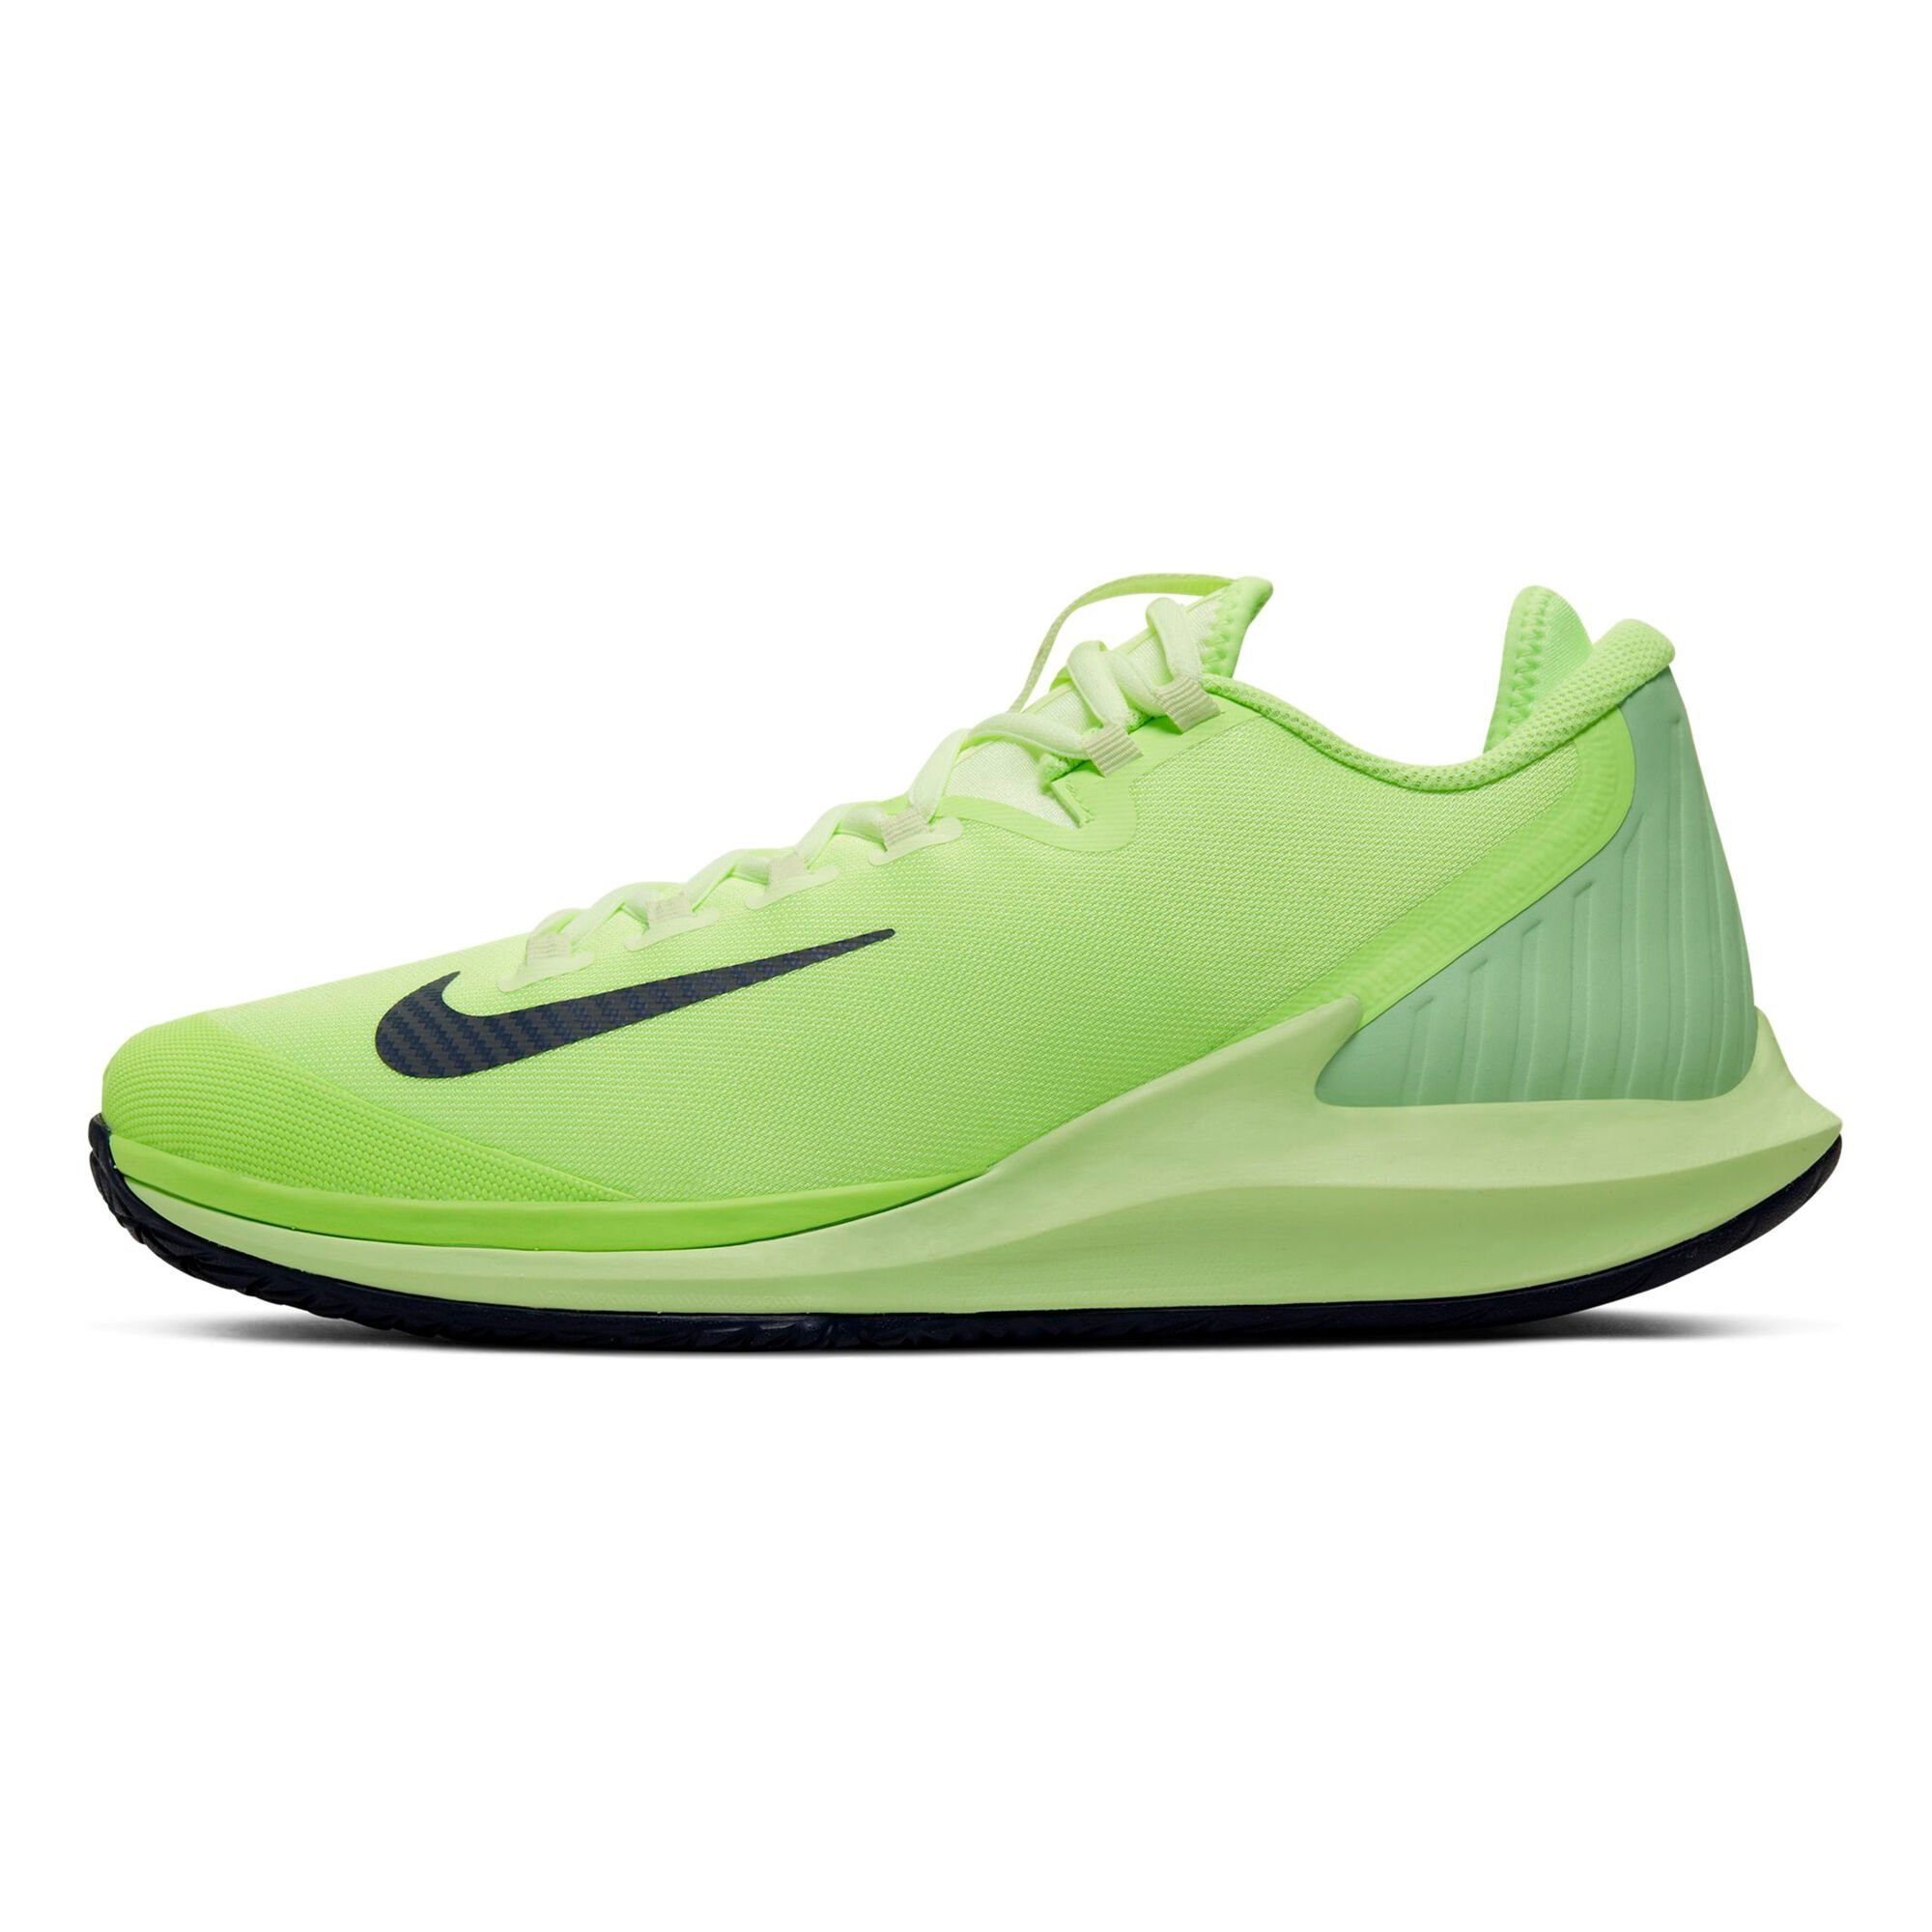 Buy Nike Air Zoom Zero All Court Shoe Men Light Green, Neon Green ...